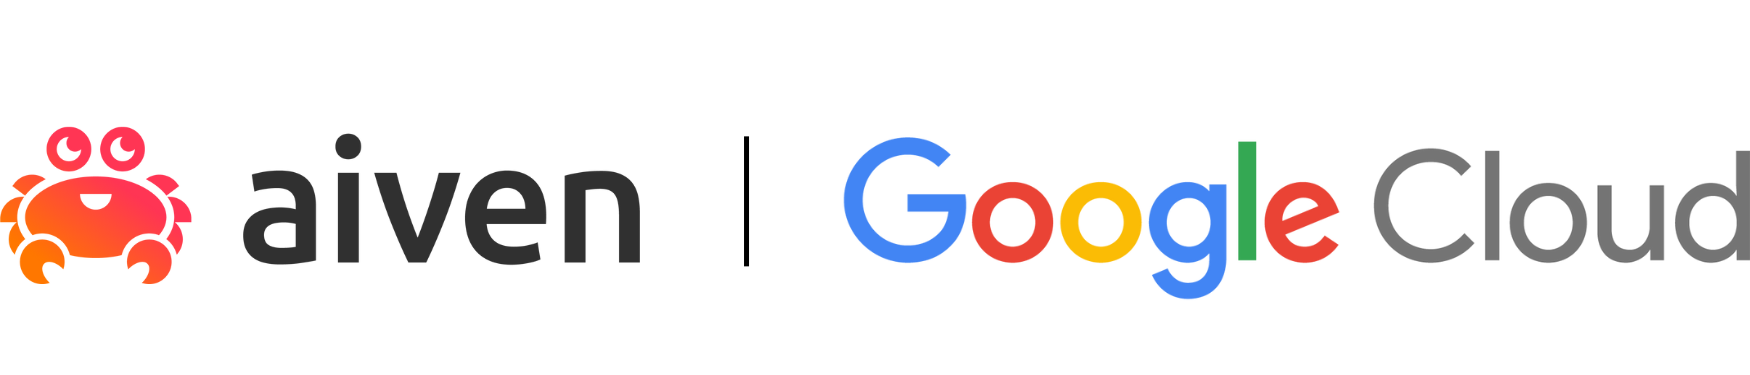 Cobranding logos Aiven and Google